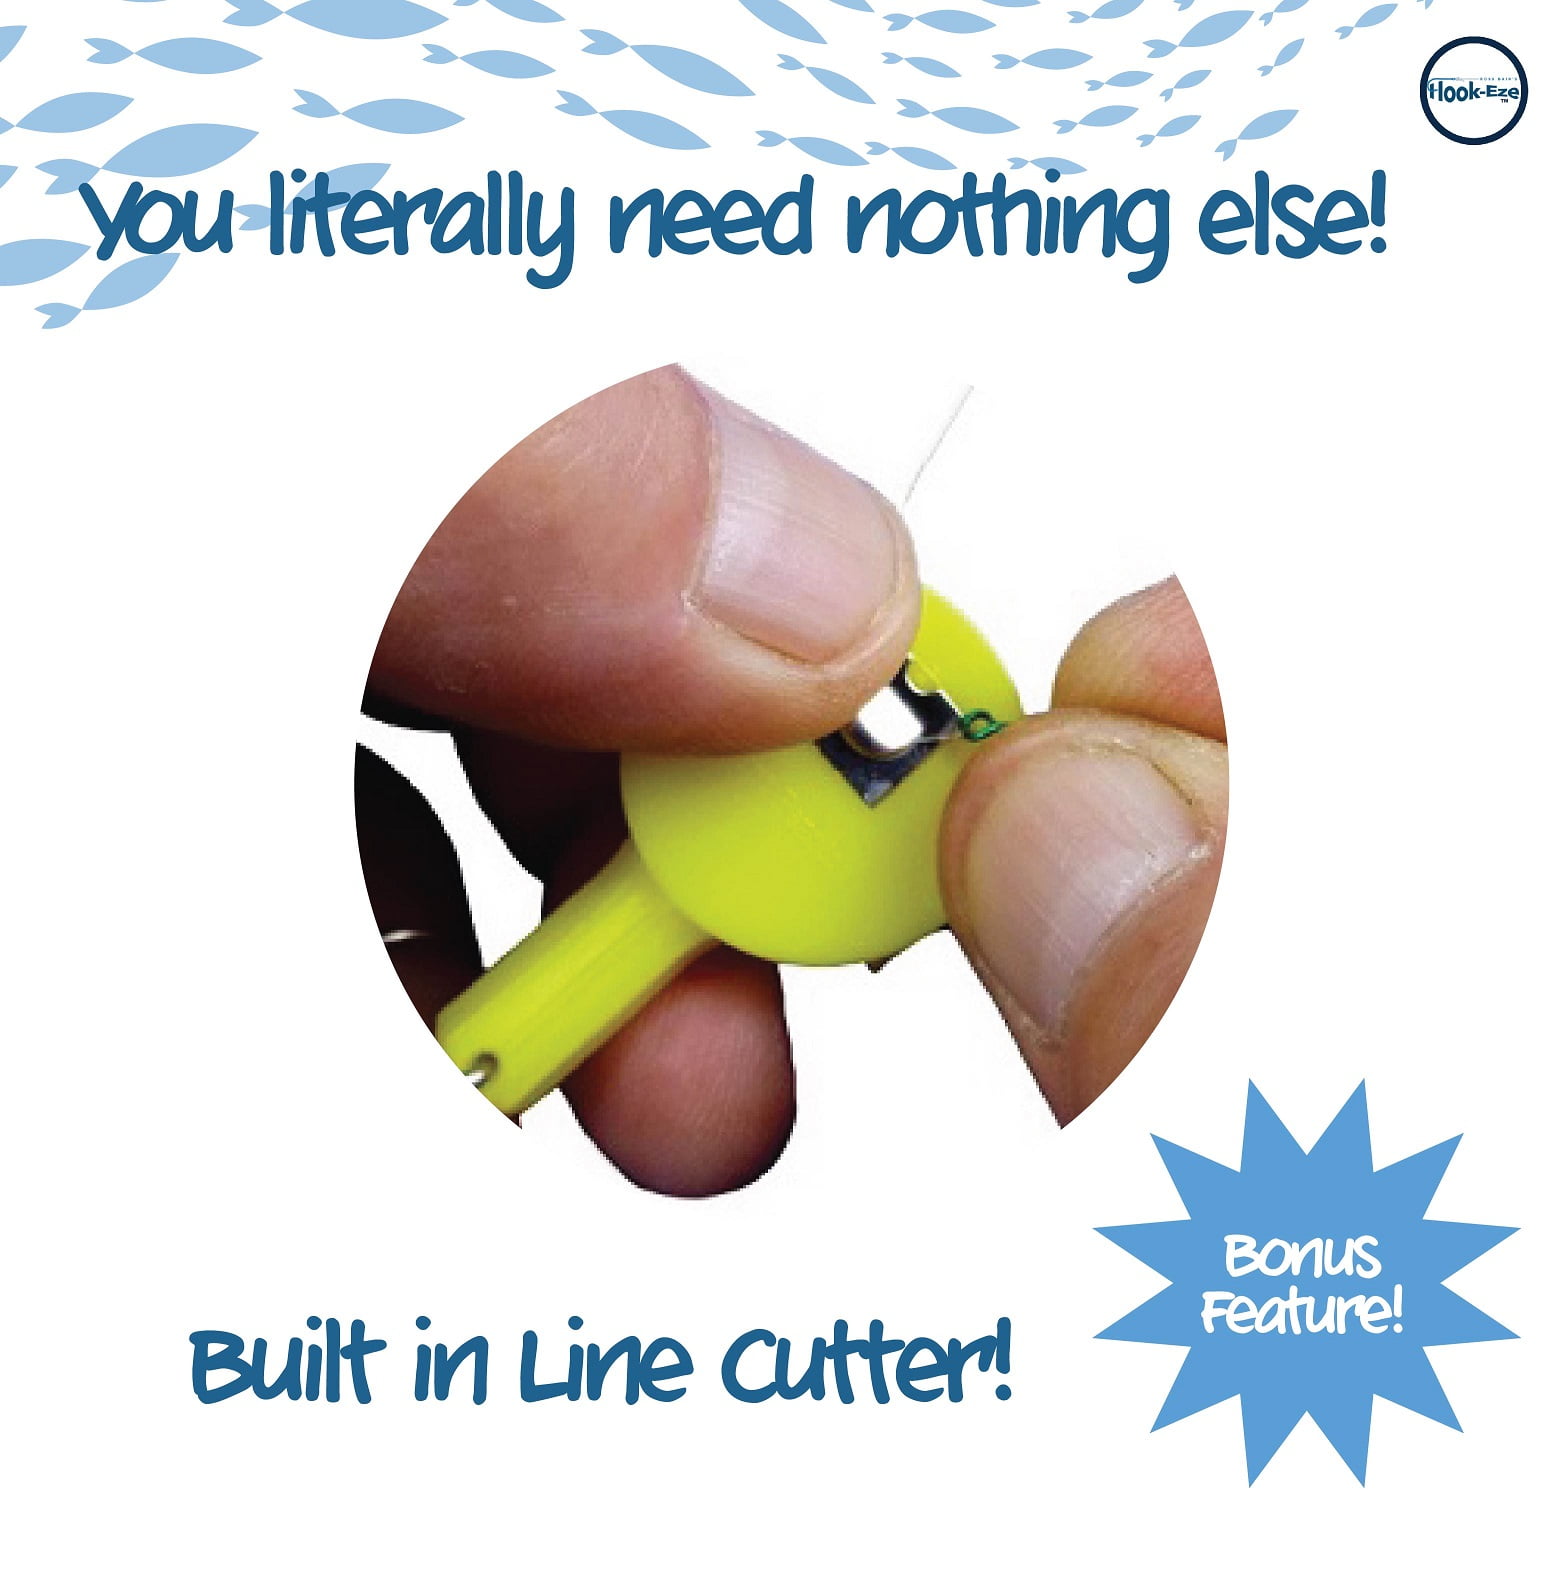 HOOK-EZE Fishing Gear Knot Tying Tool | Cover Fishing Hooks While Tying  Strong Fishing Knots, Stocking Stuffers Gifts for Men, Great Fishing